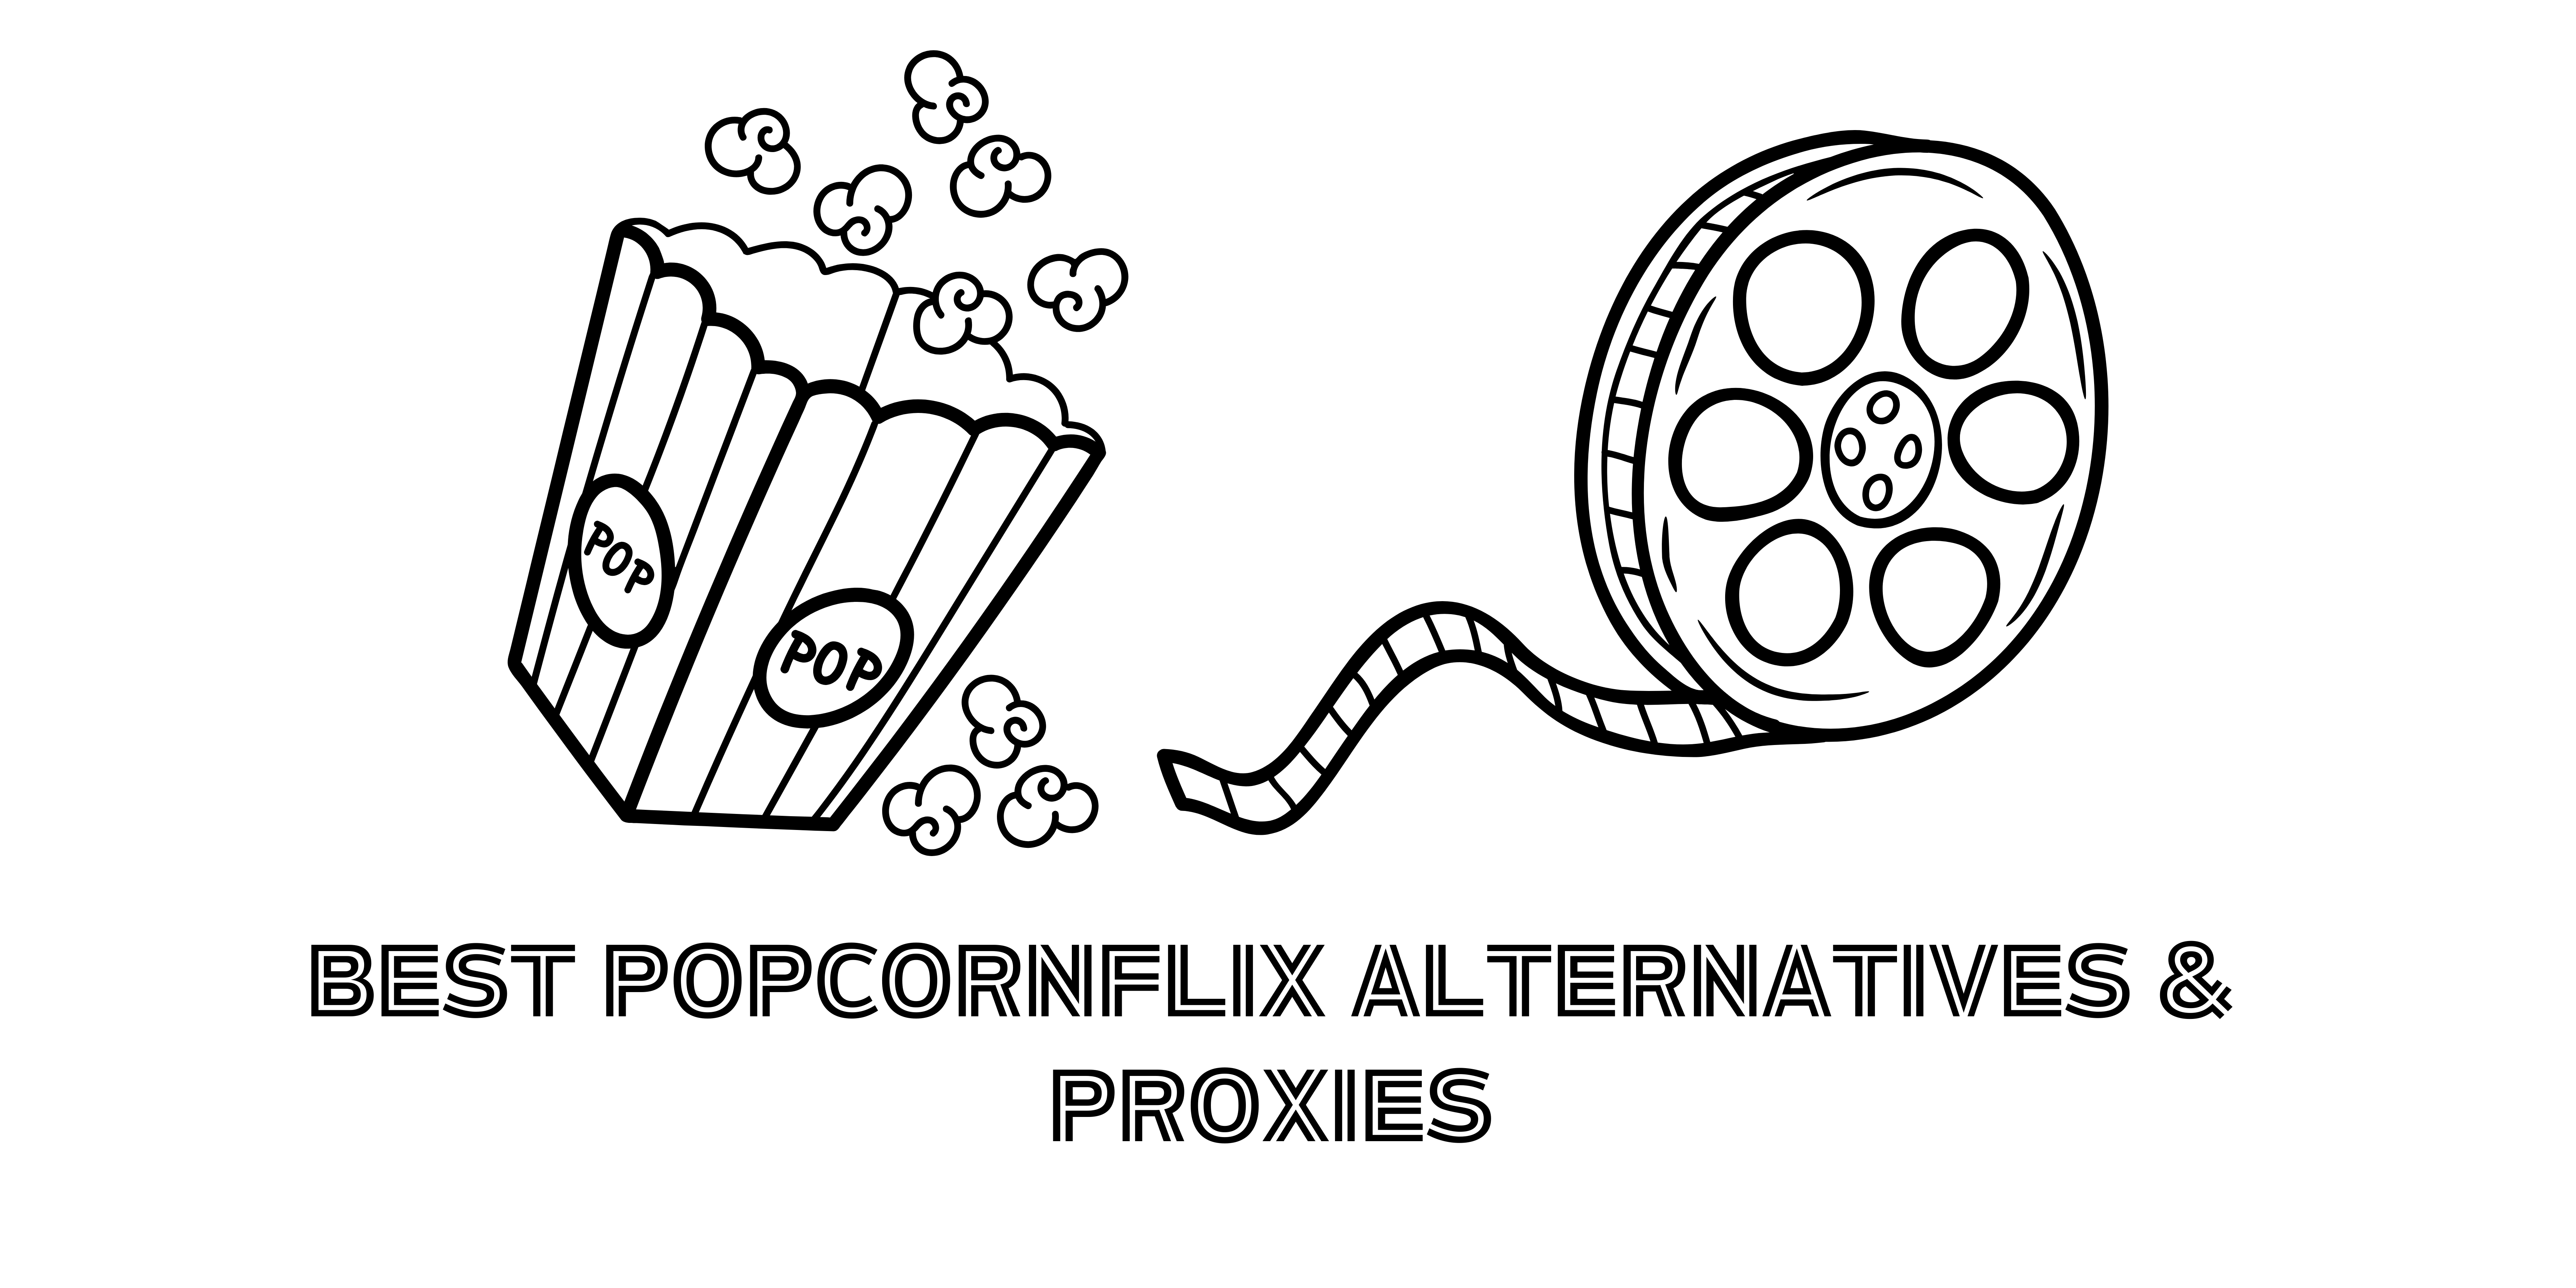 Best Popcornflix Alternatives & Proxies